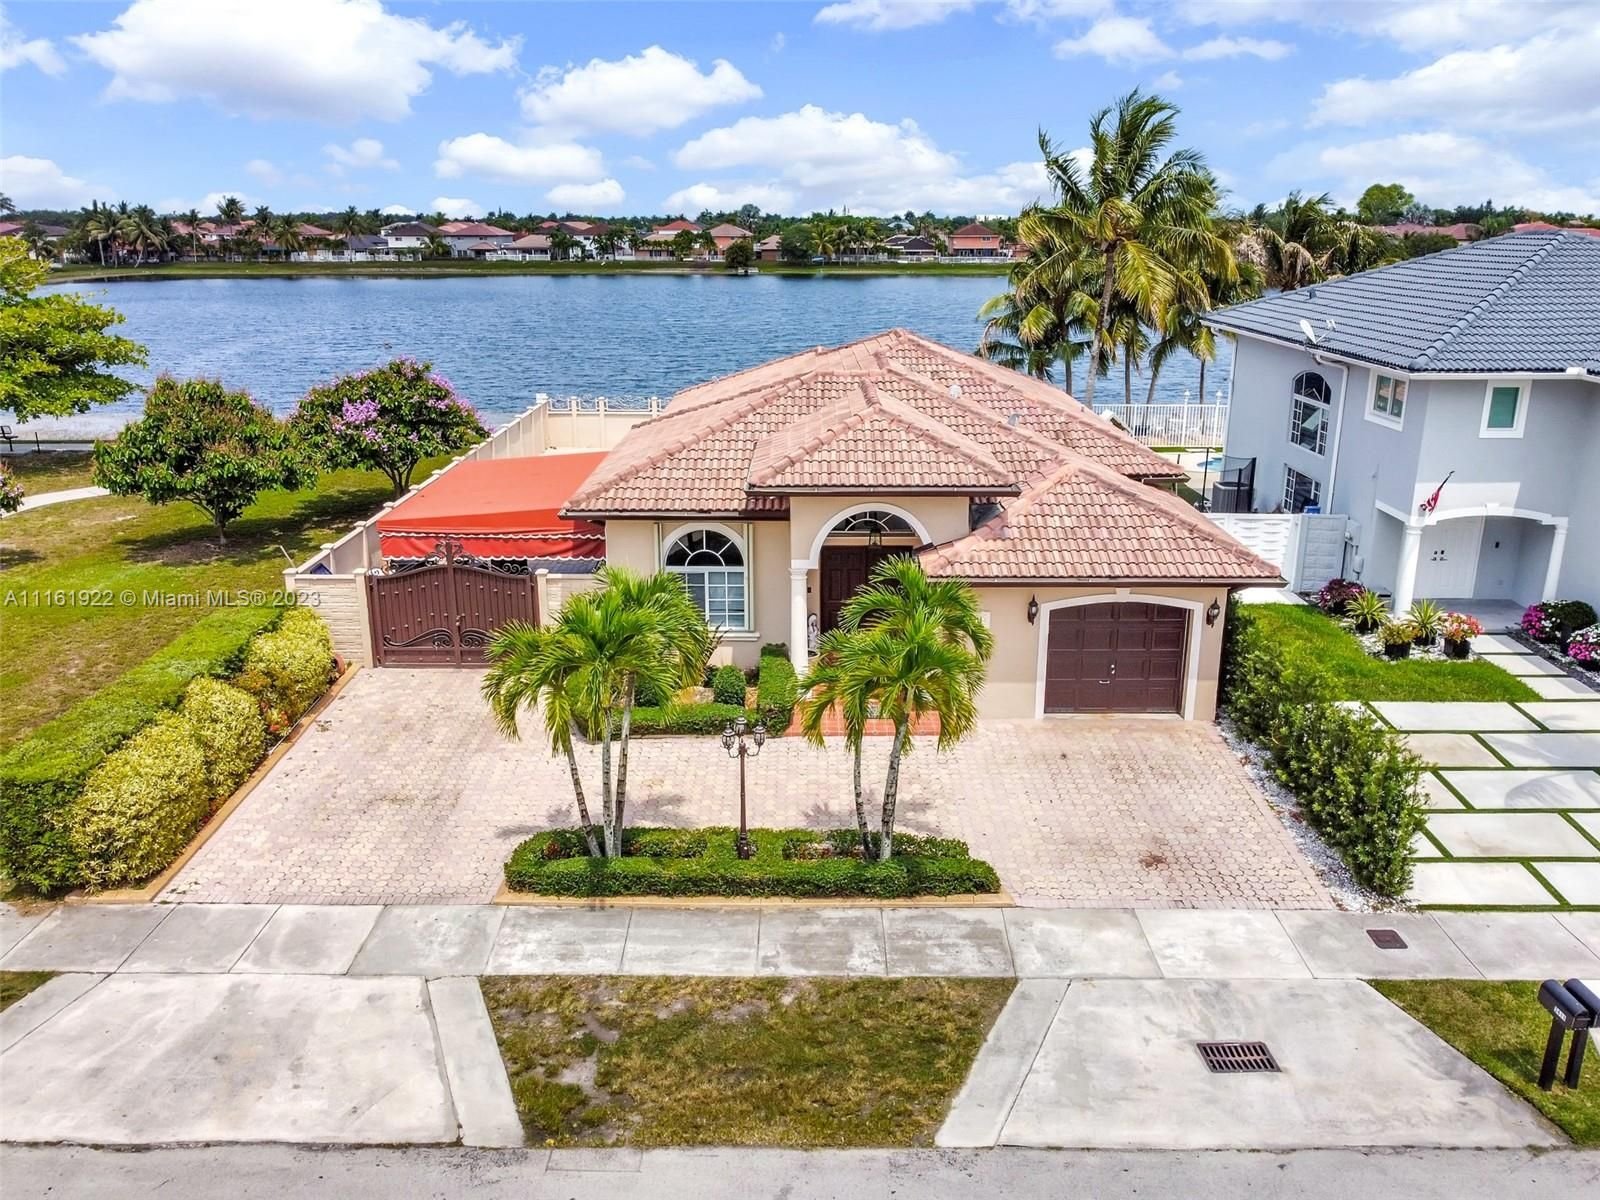 Real estate property located at 3411 156th Ct, Miami-Dade County, Miami, FL